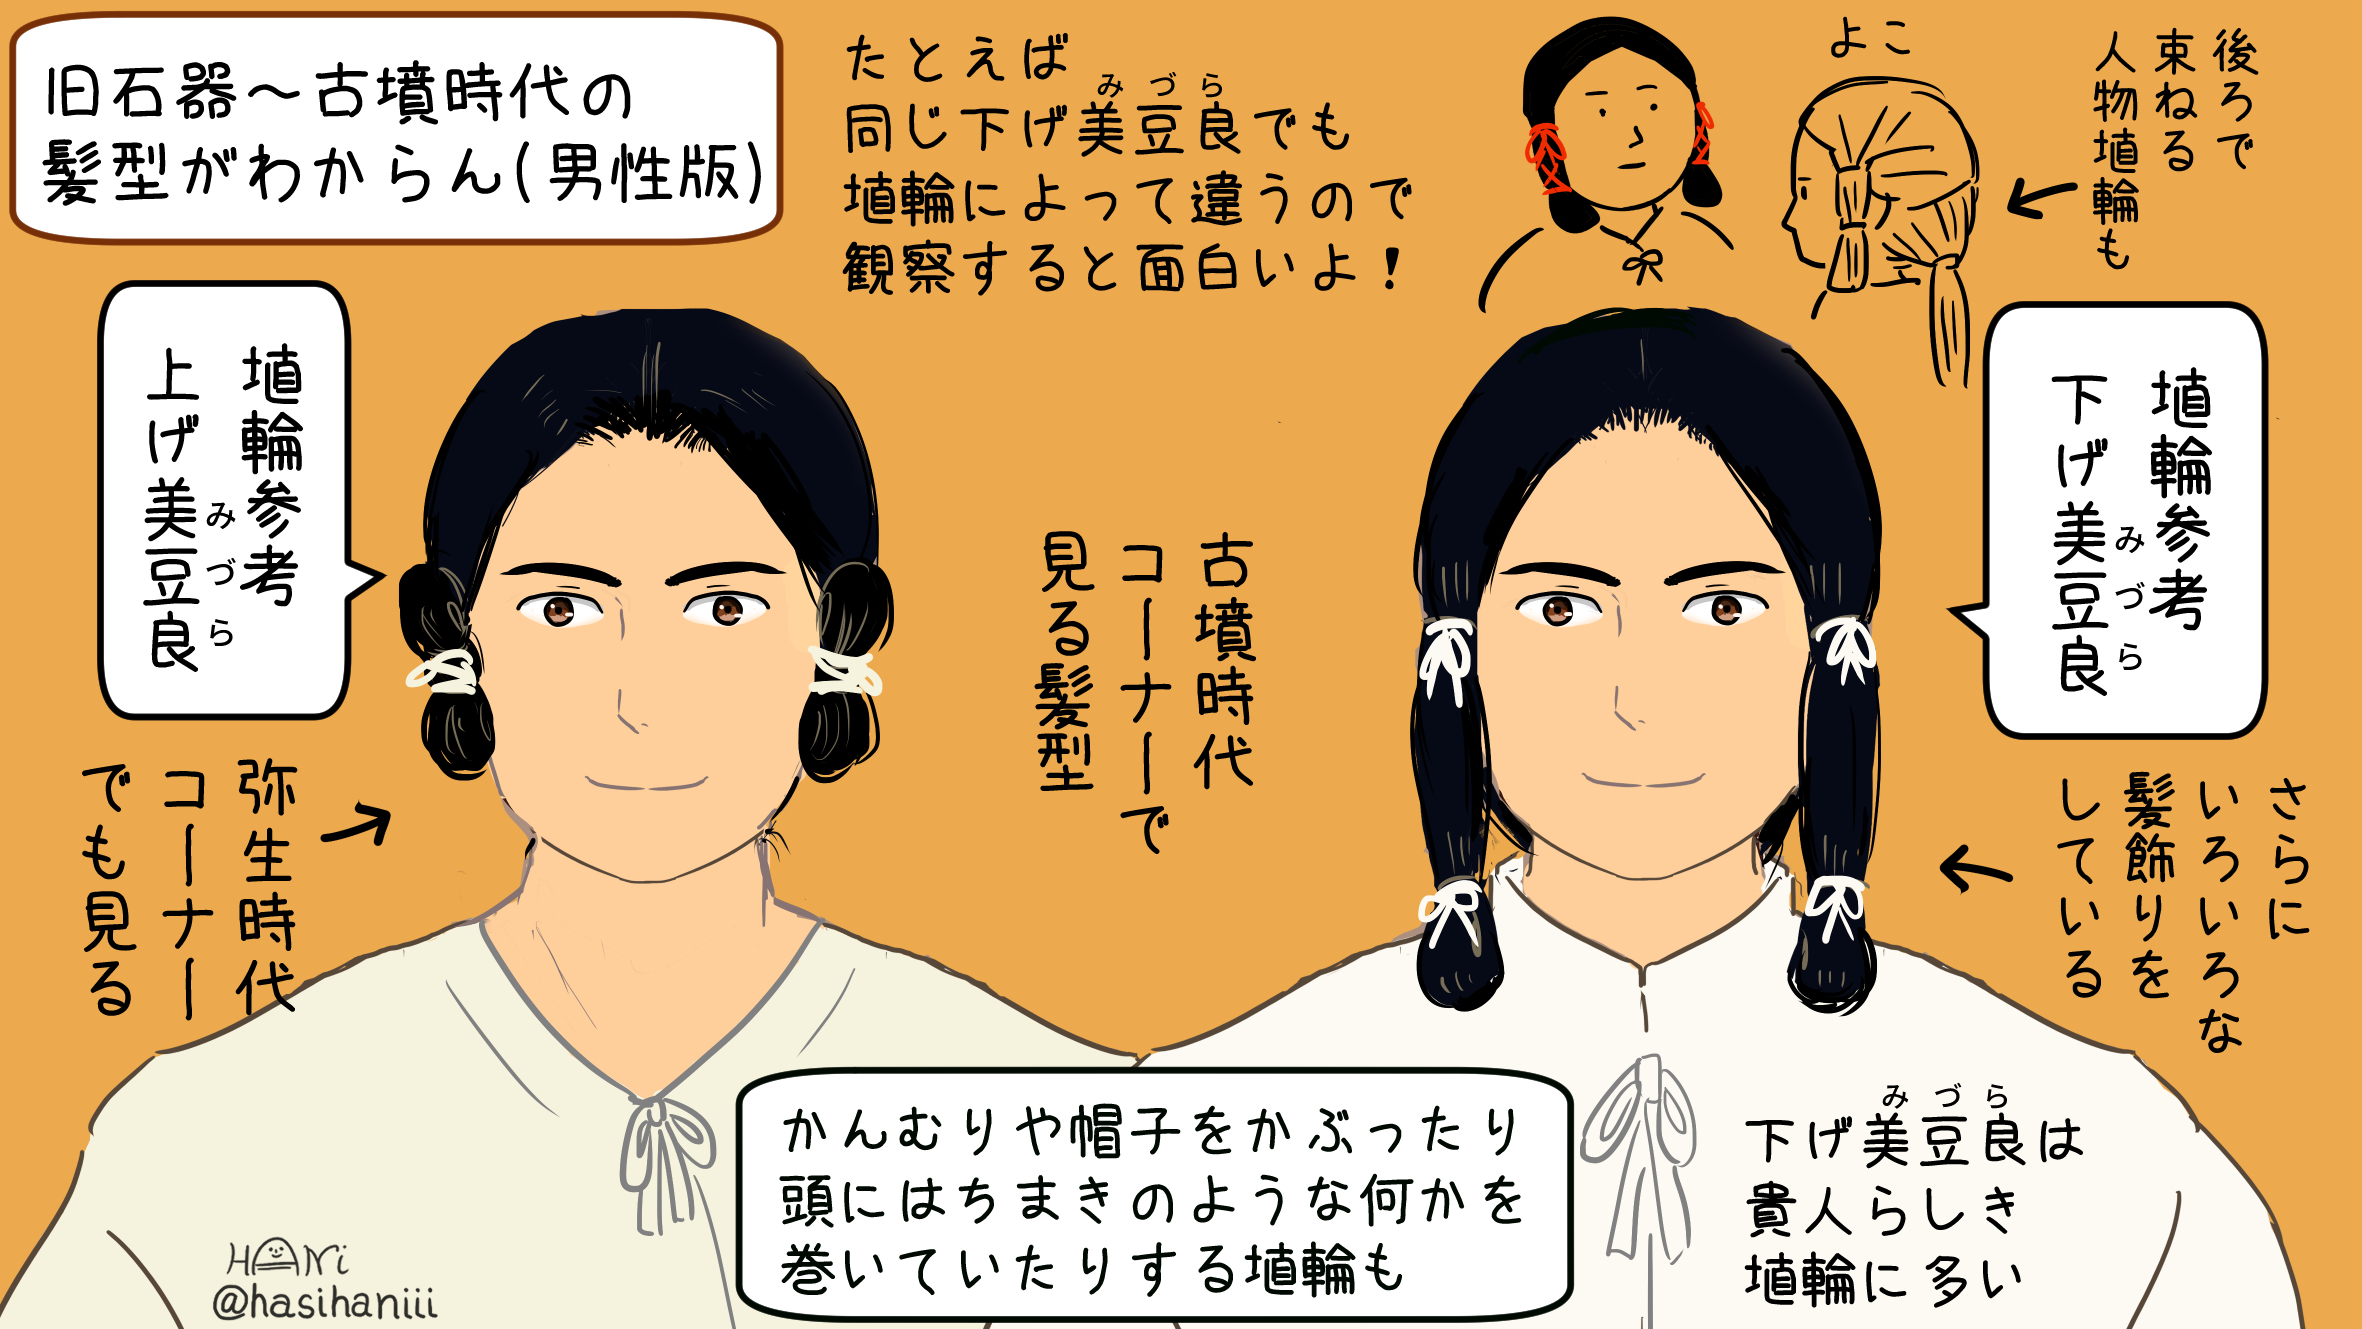 Kodai Hasihaniii 縄文時代 弥生時代初めの女性の髪型として 土偶 が参考になるのでは と思います T Co 7x8jalmjze Twitter